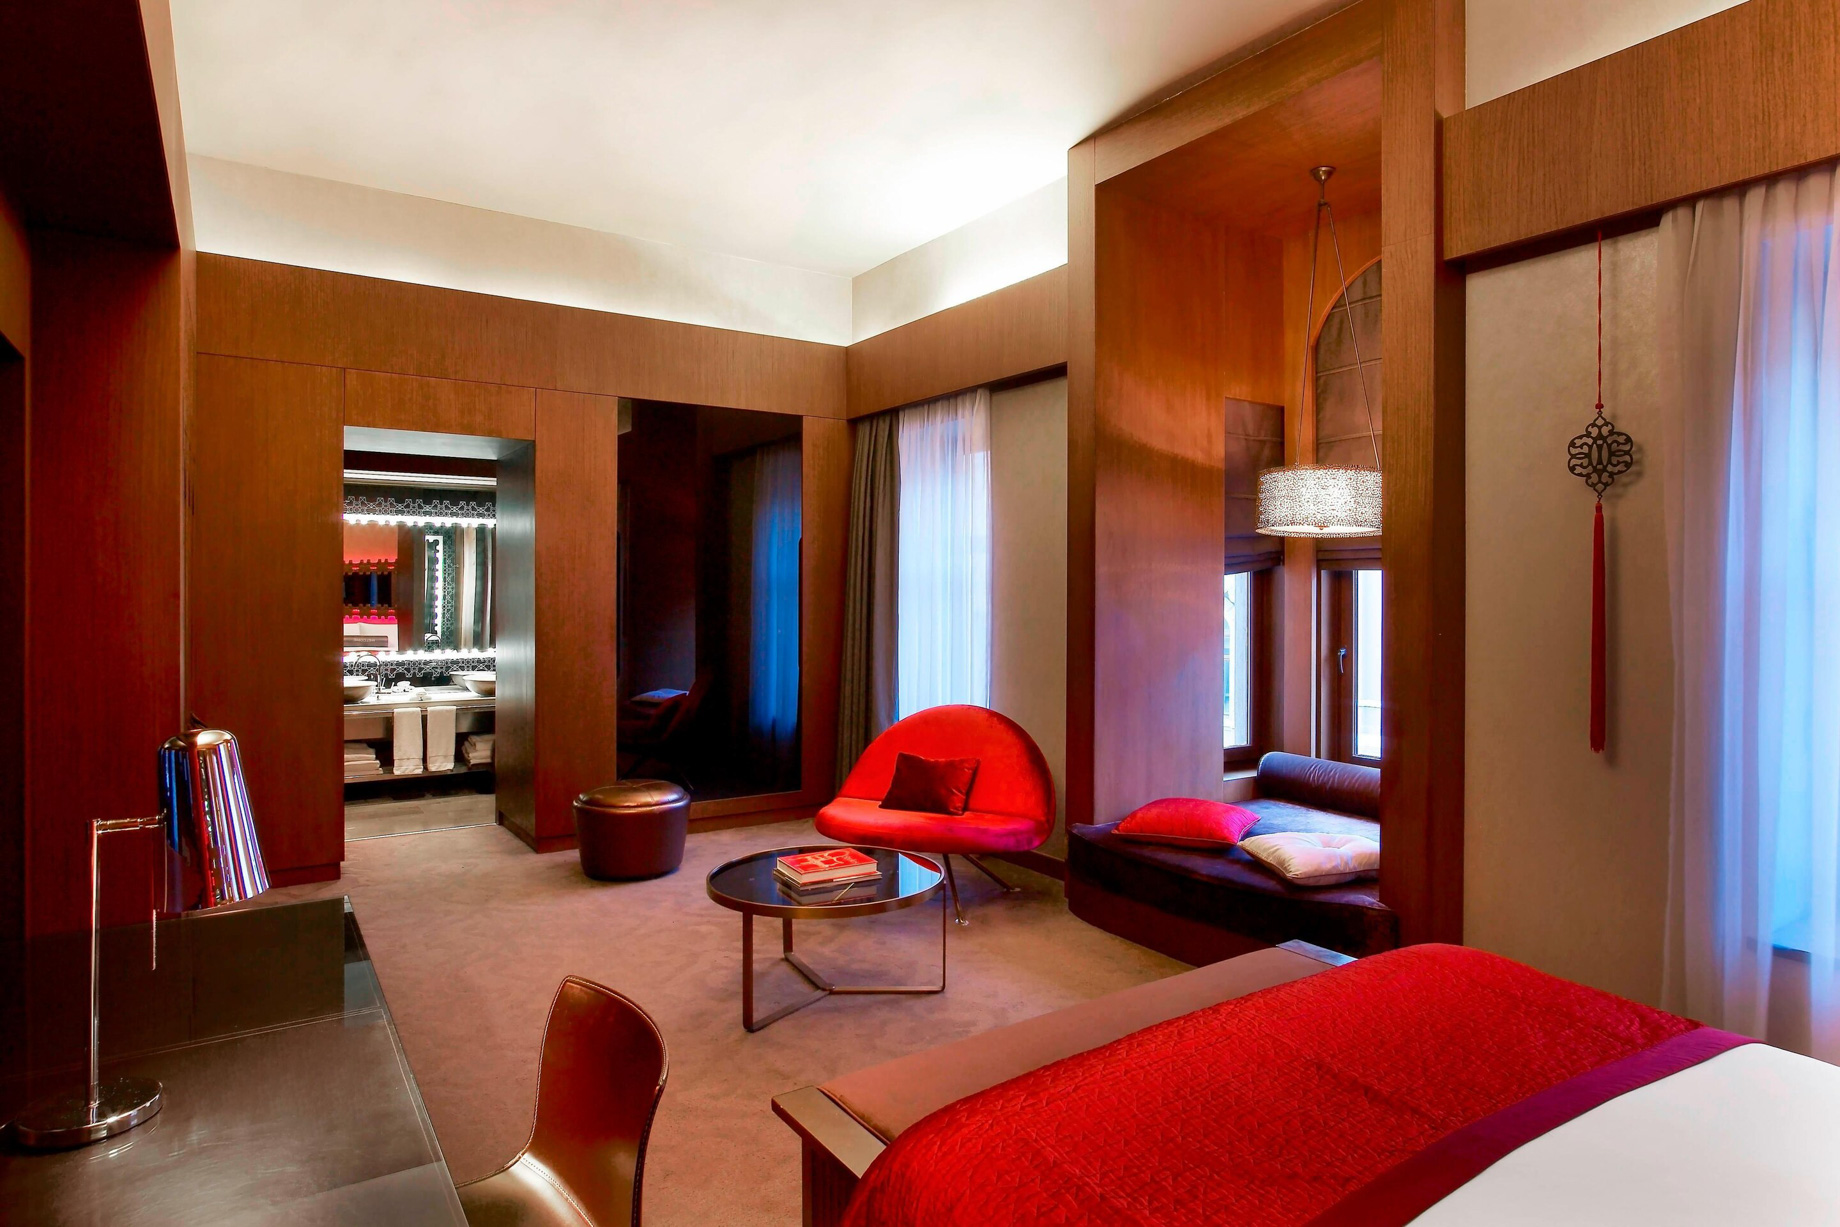 W Istanbul Hotel – Istanbul, Turkey – Fantastic Suite and Bathroom